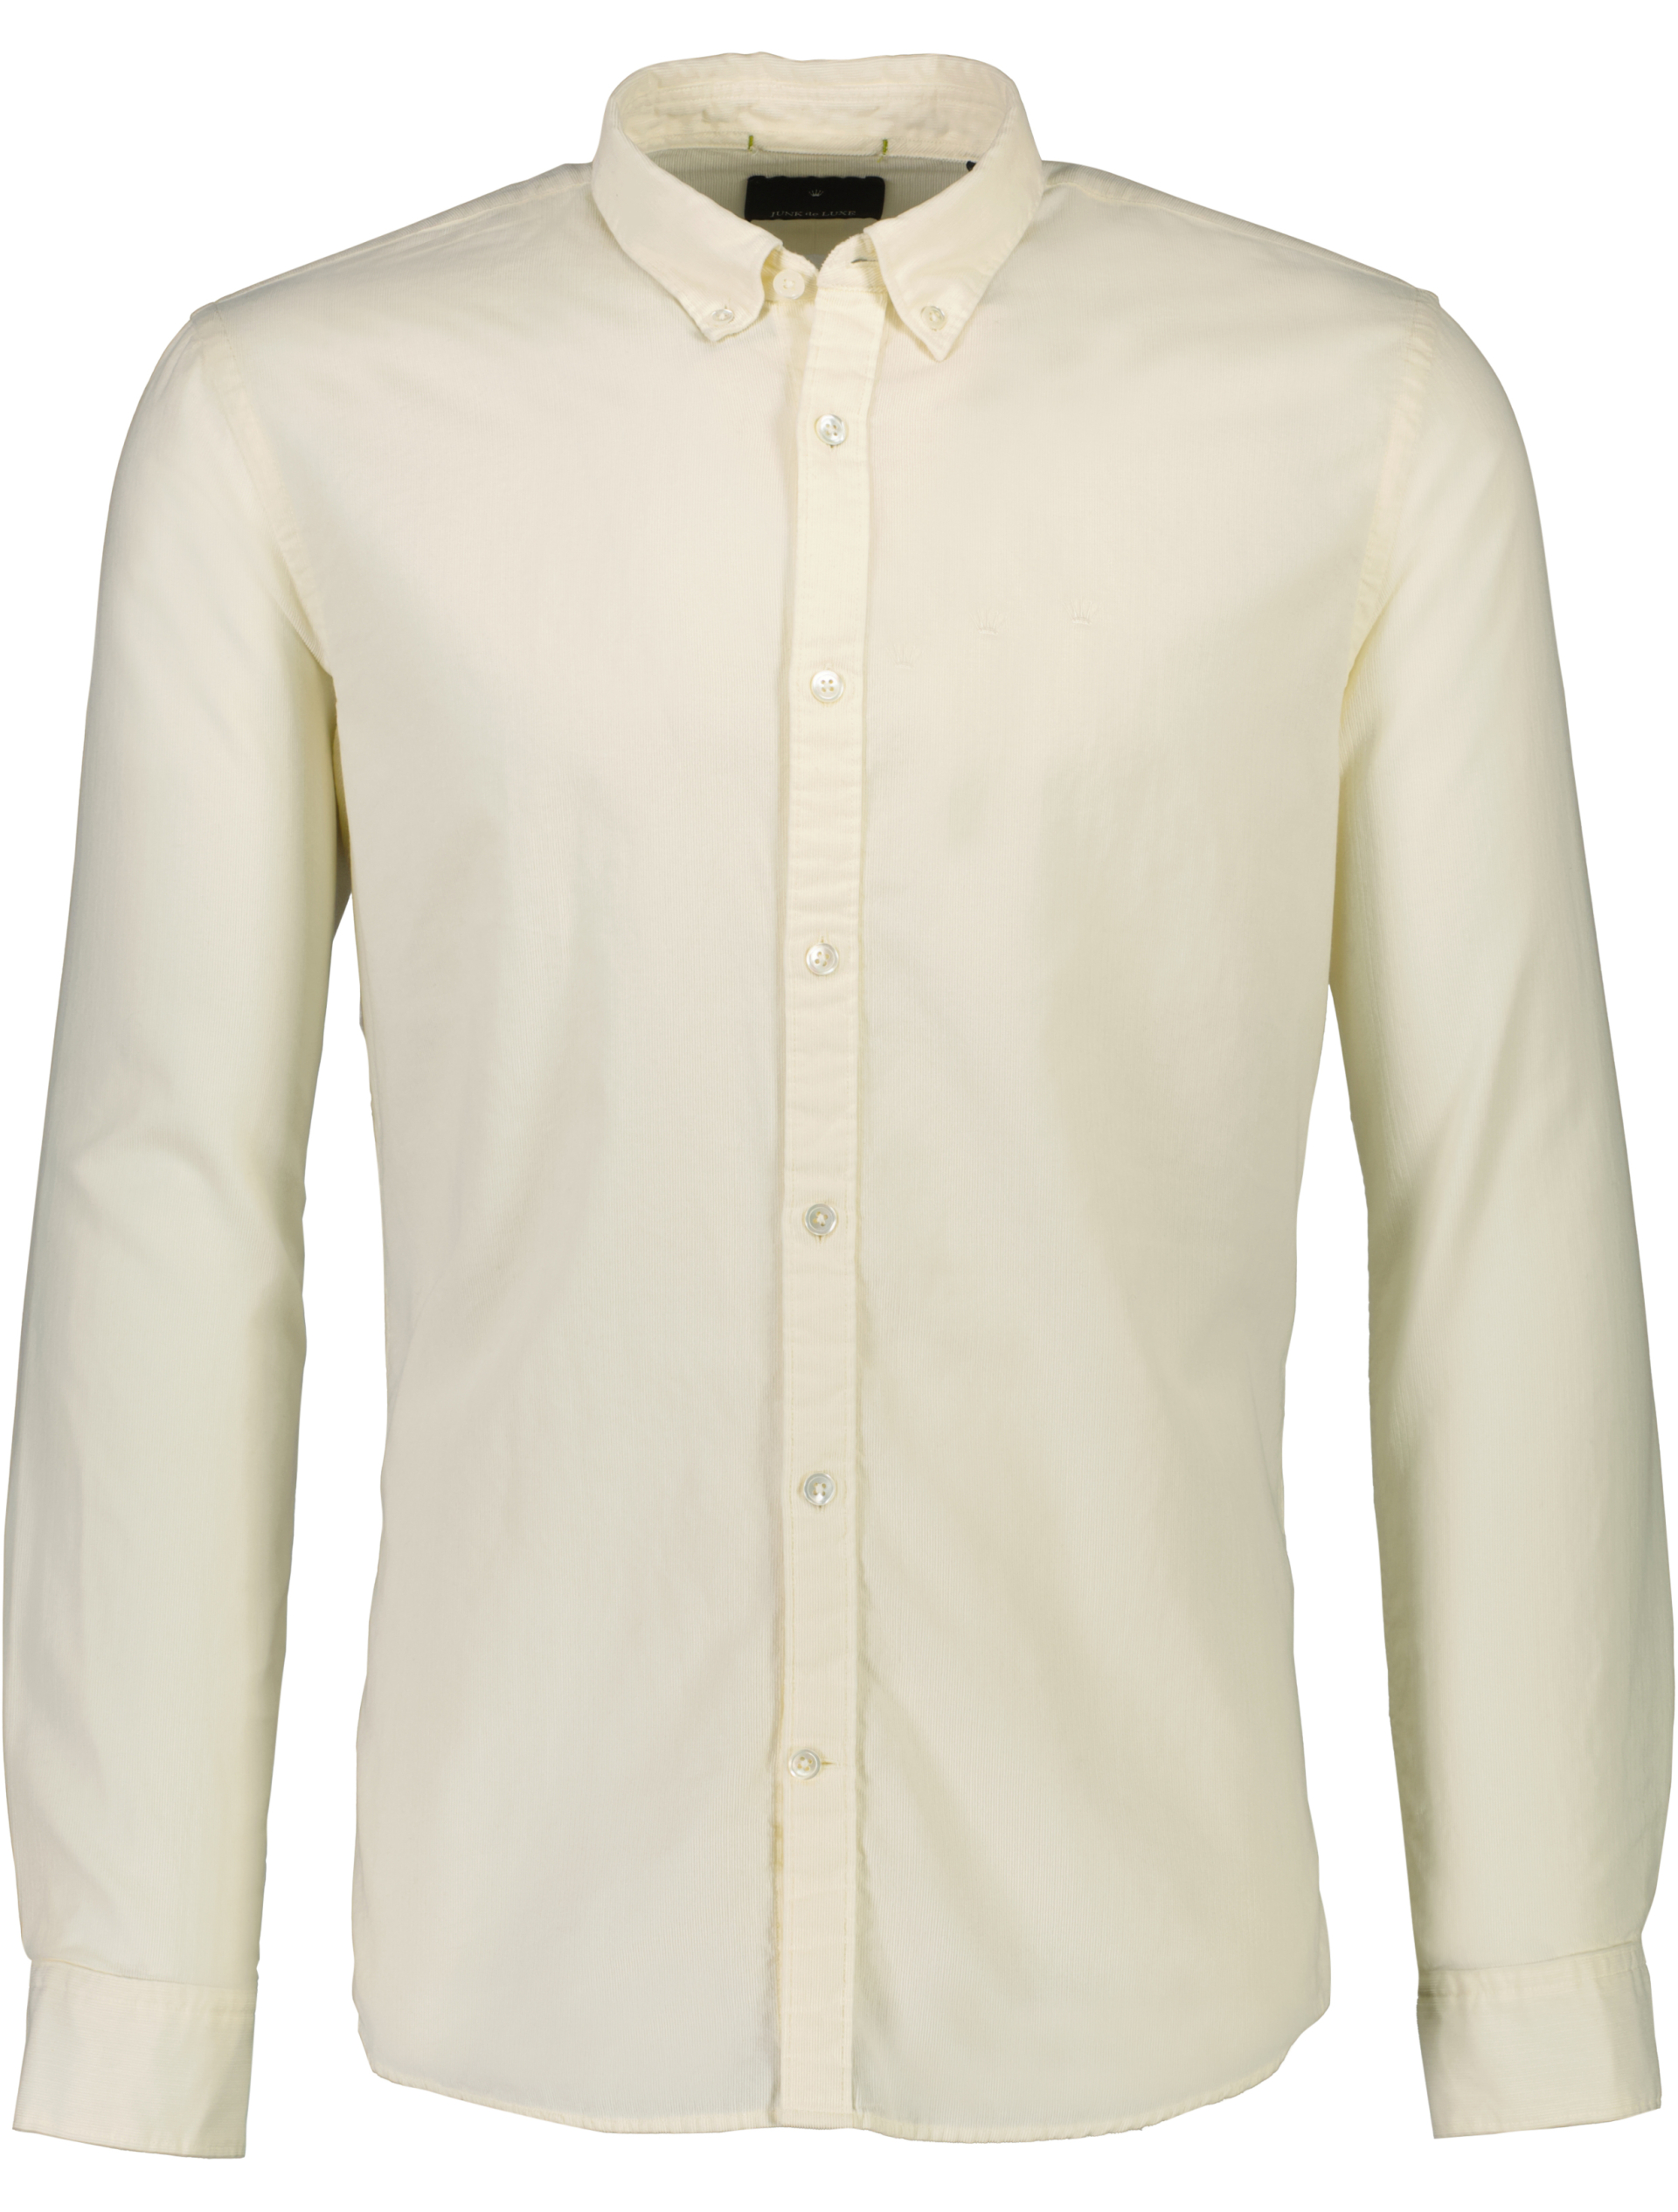 Junk de Luxe Corduroy skjorta vit / ivory white